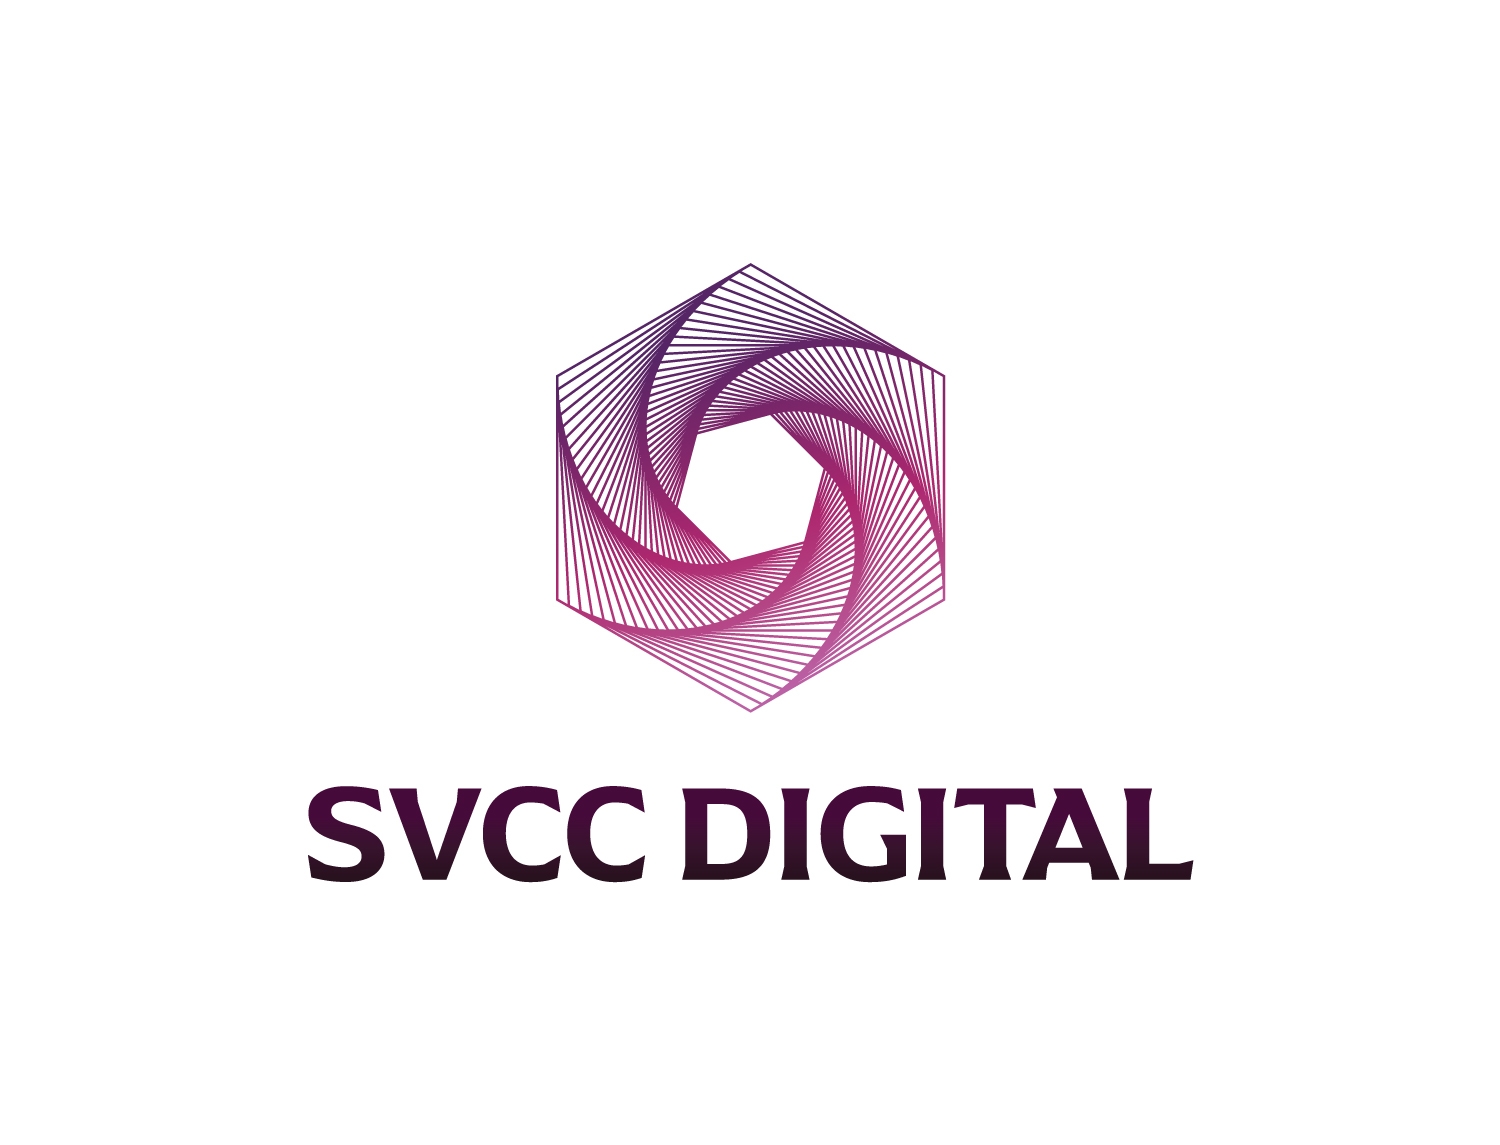 SVCC Digital